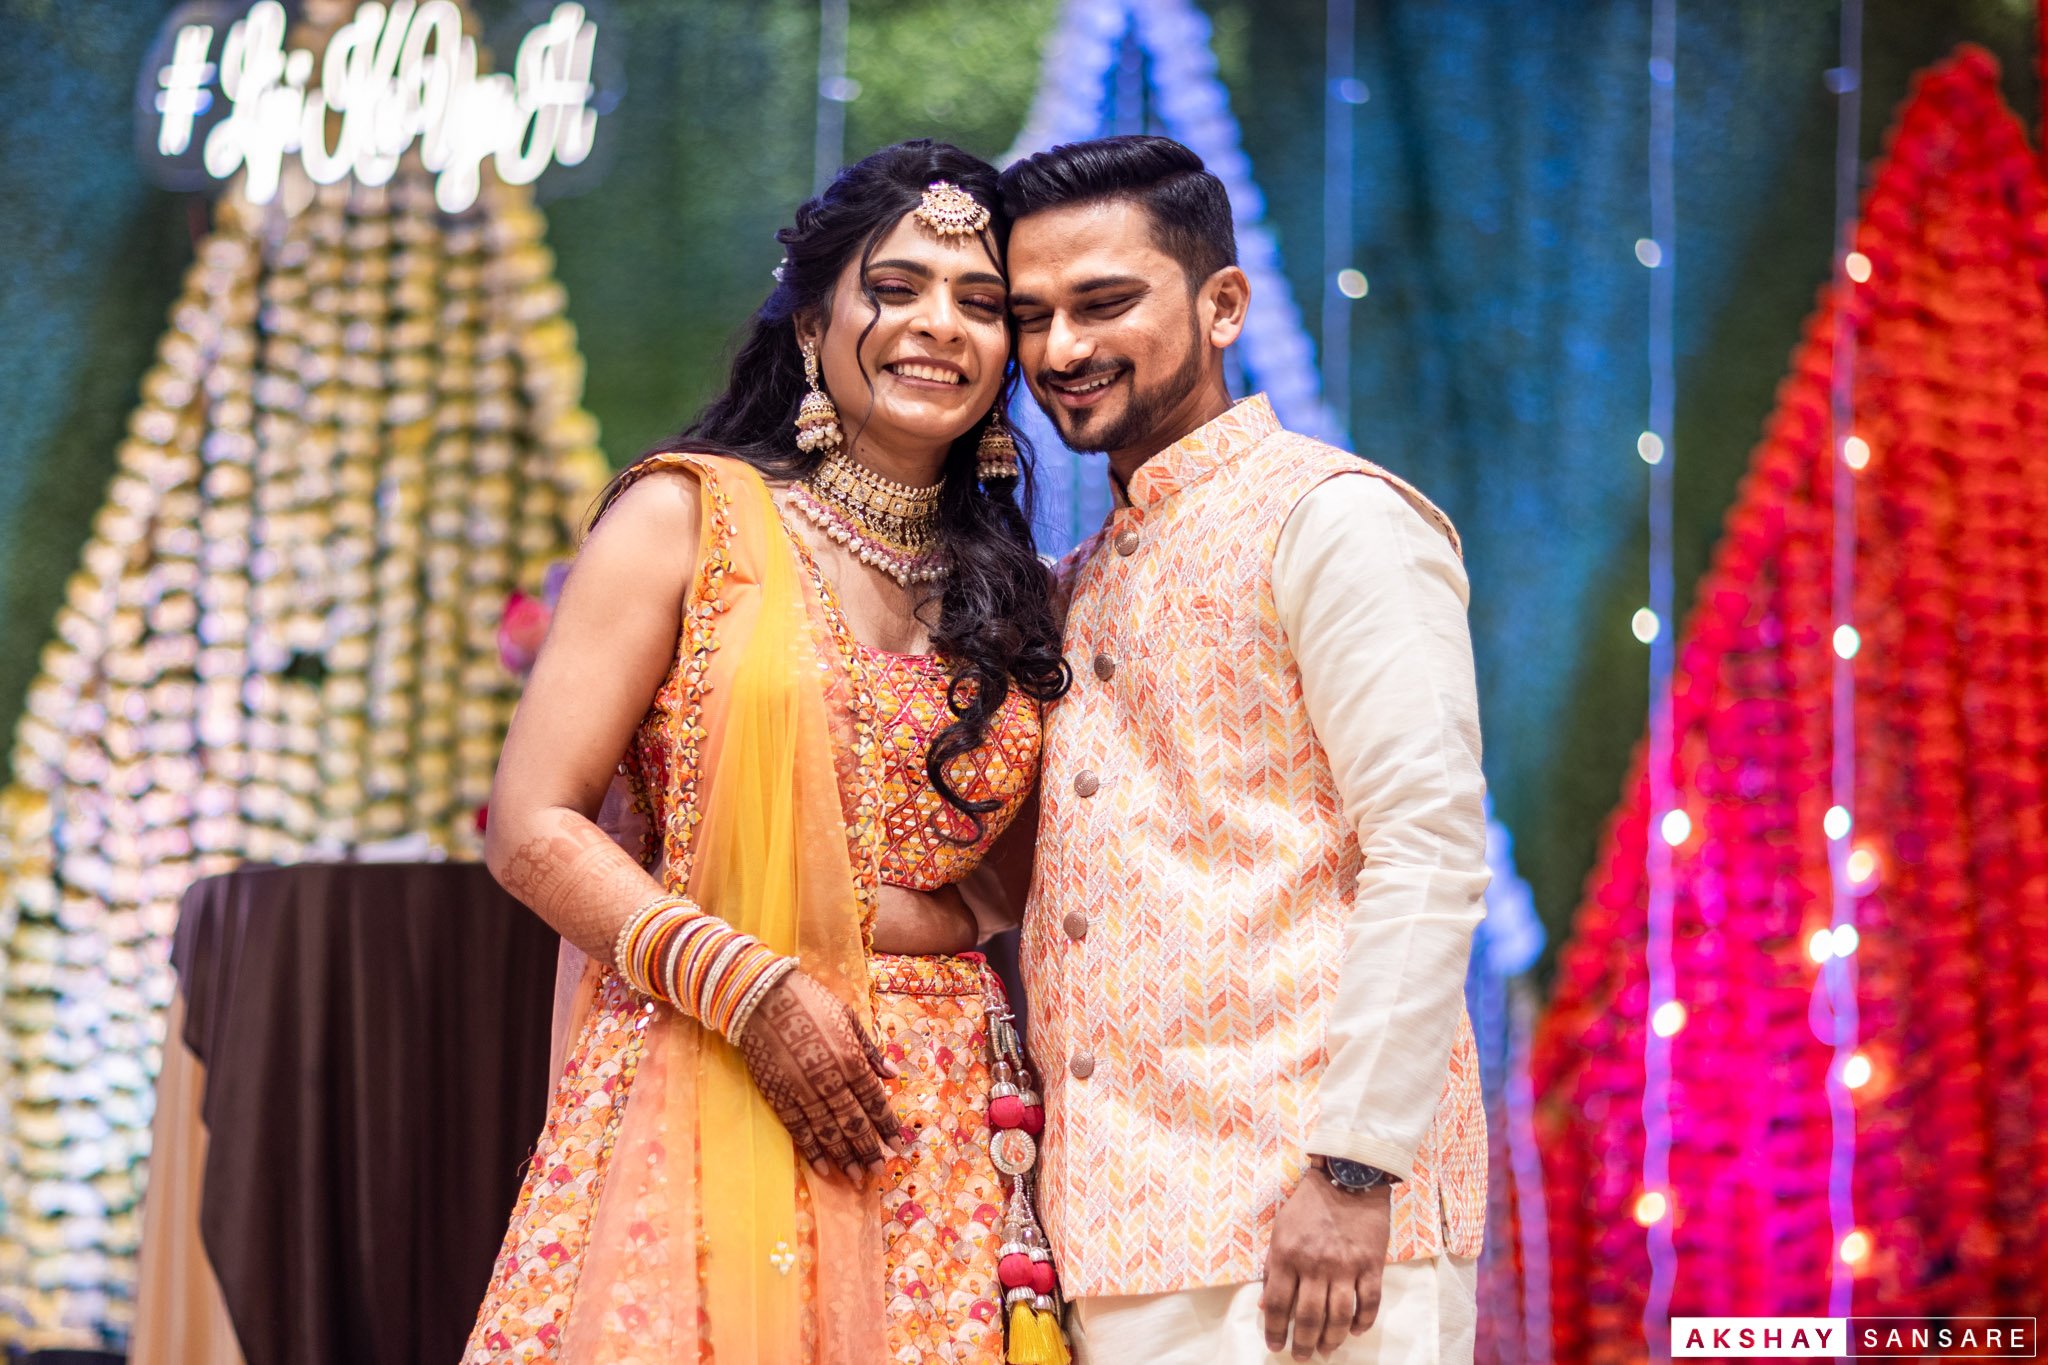 Lipika x Bhavya Compress Akshay Sansare Photography & Films Best wedding photographers in mumbai india-19.jpg